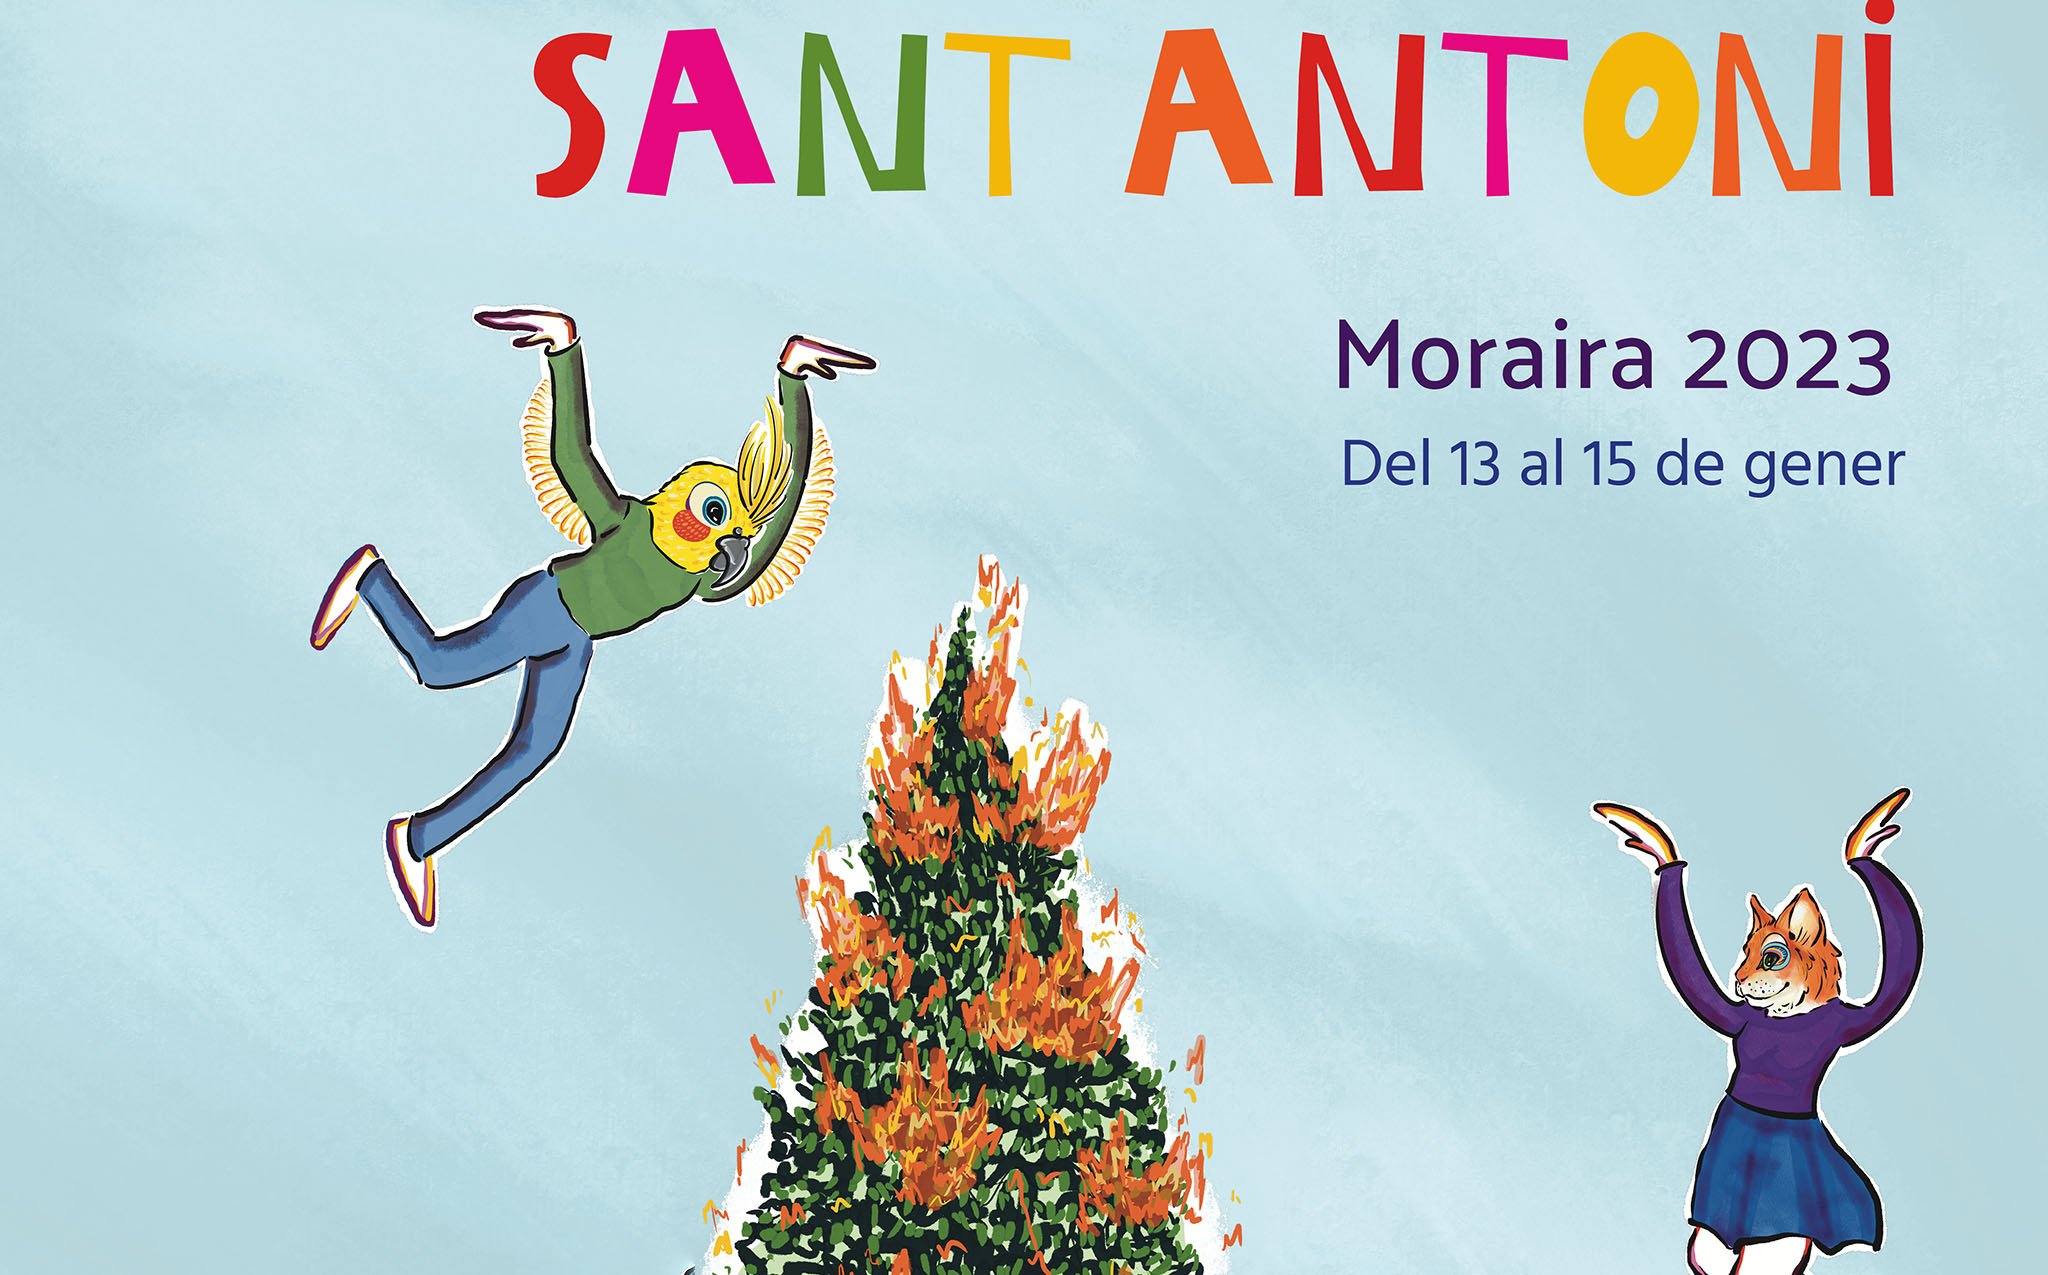 Cartel de la fiesta de Sant Antoni en Moraira en 2023